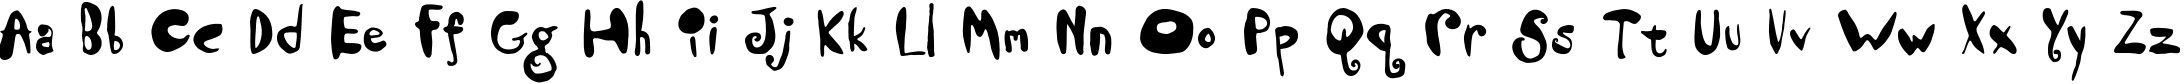 Пример написания английского алфавита шрифтом LillaFunk